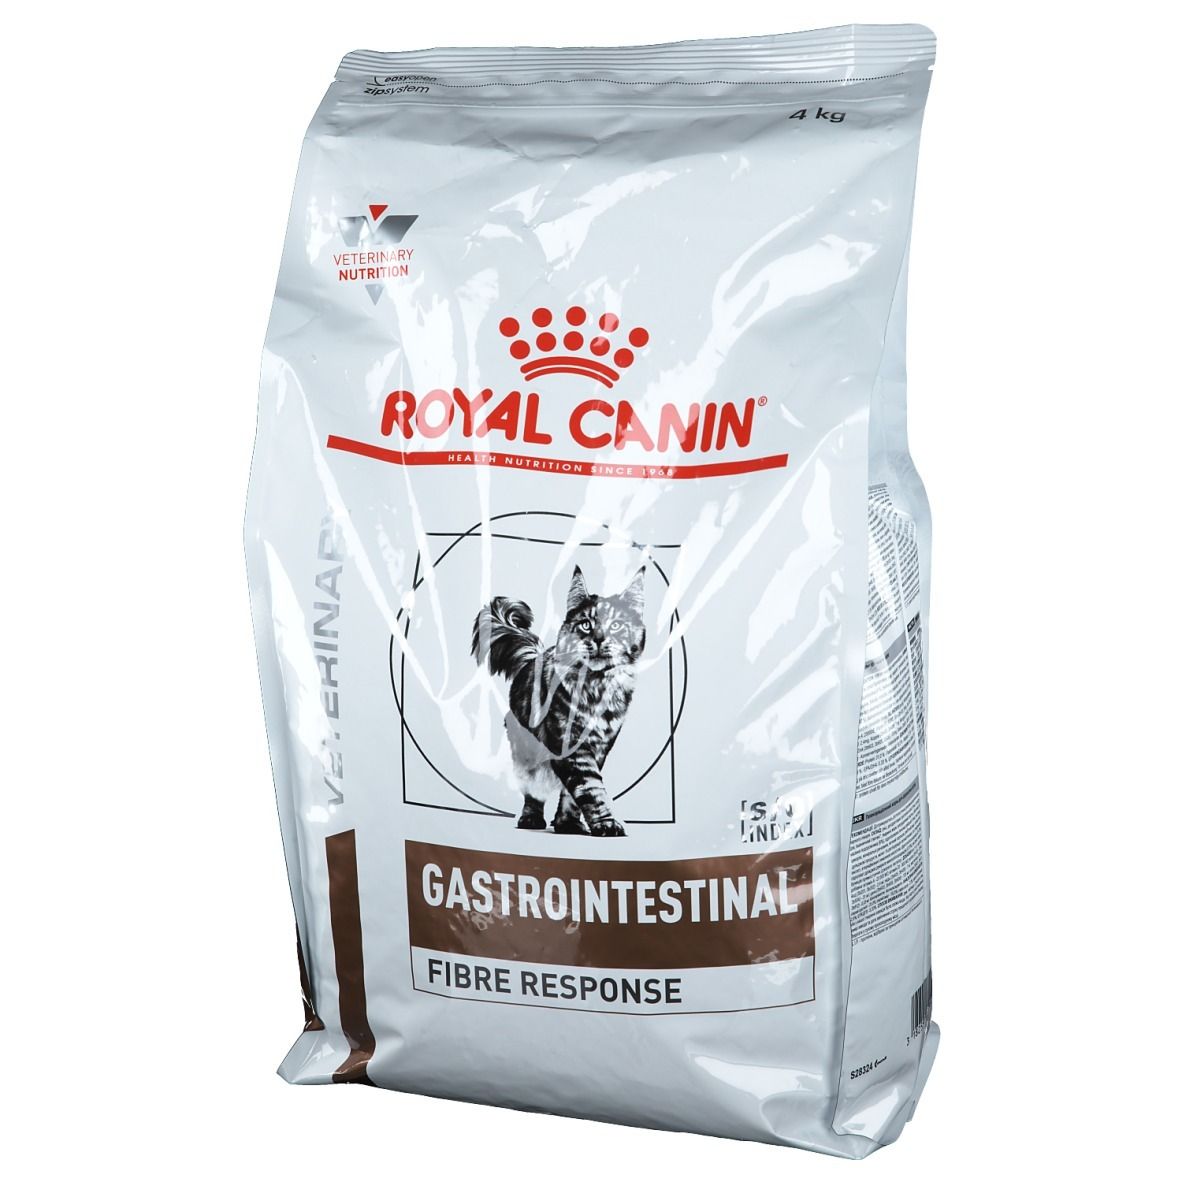 Royal Canin® Gastrointestinal Fibre Response